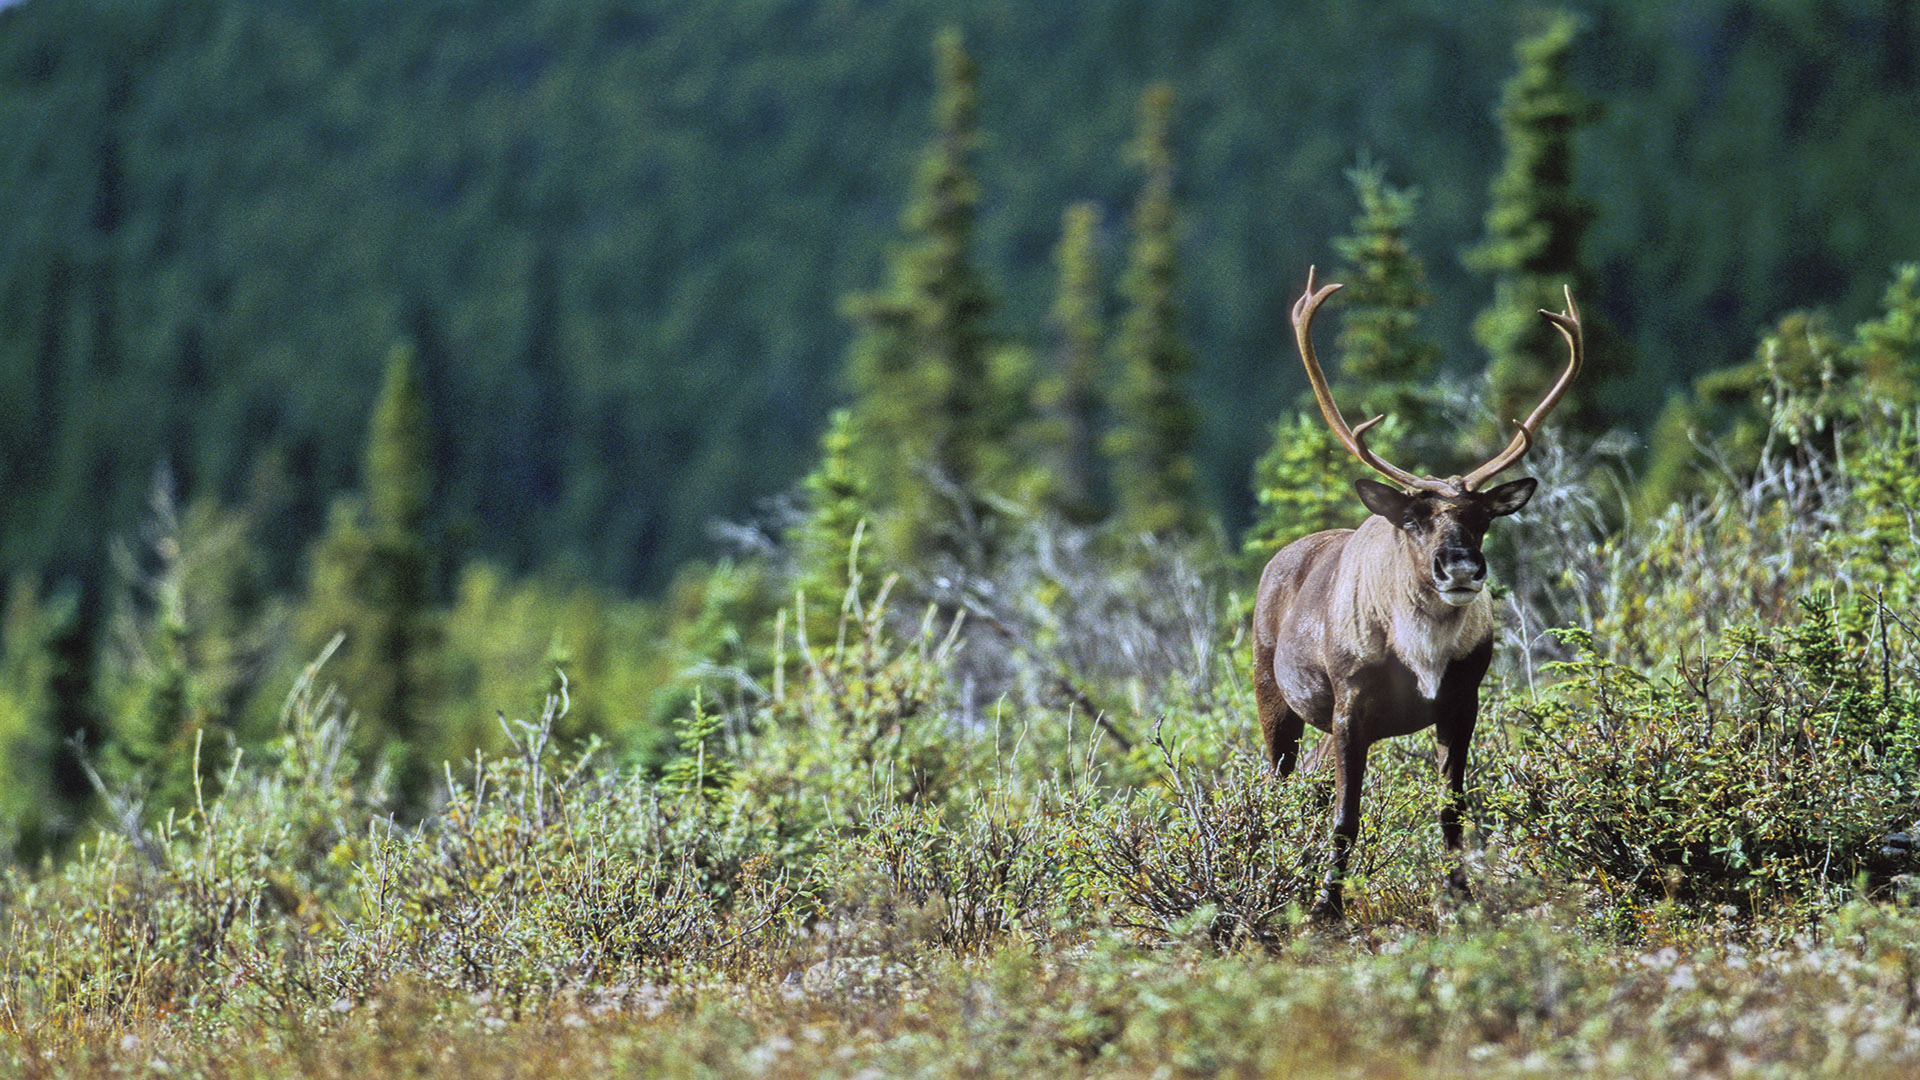 Mountain caribou (Photo by John E. Marriott)